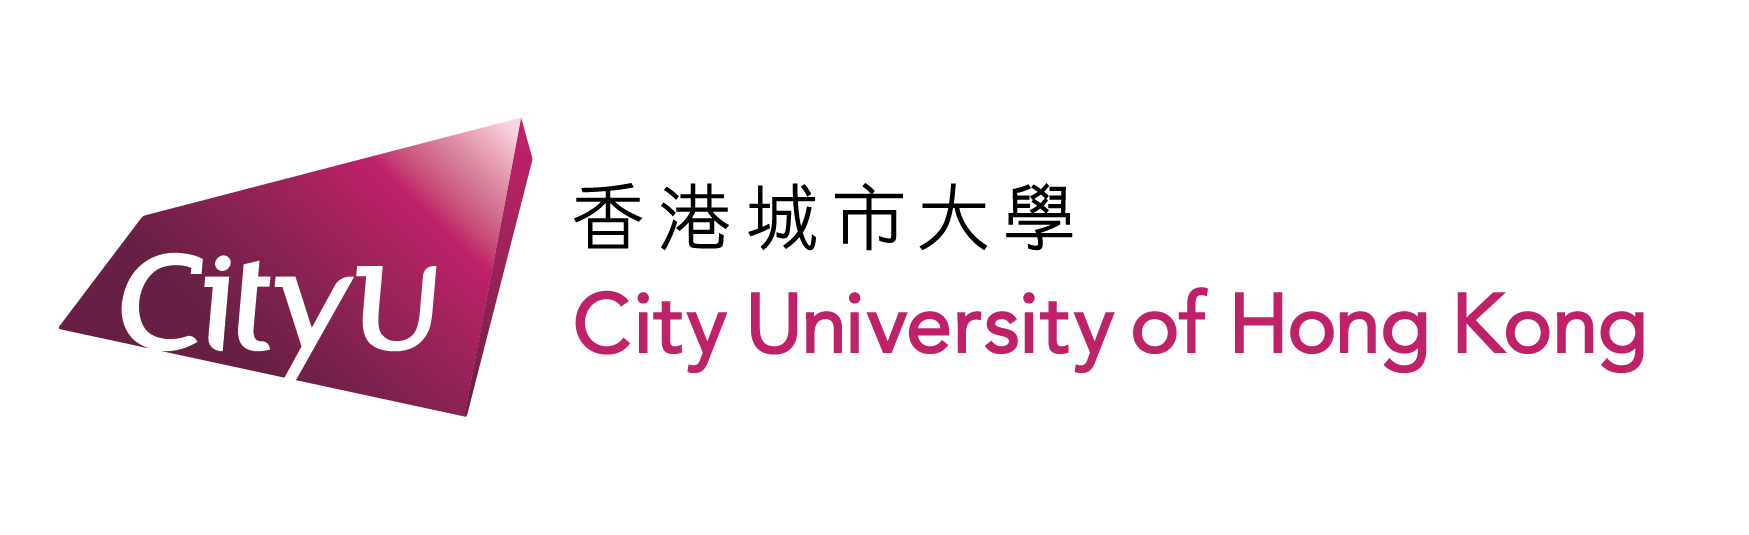 City University_001